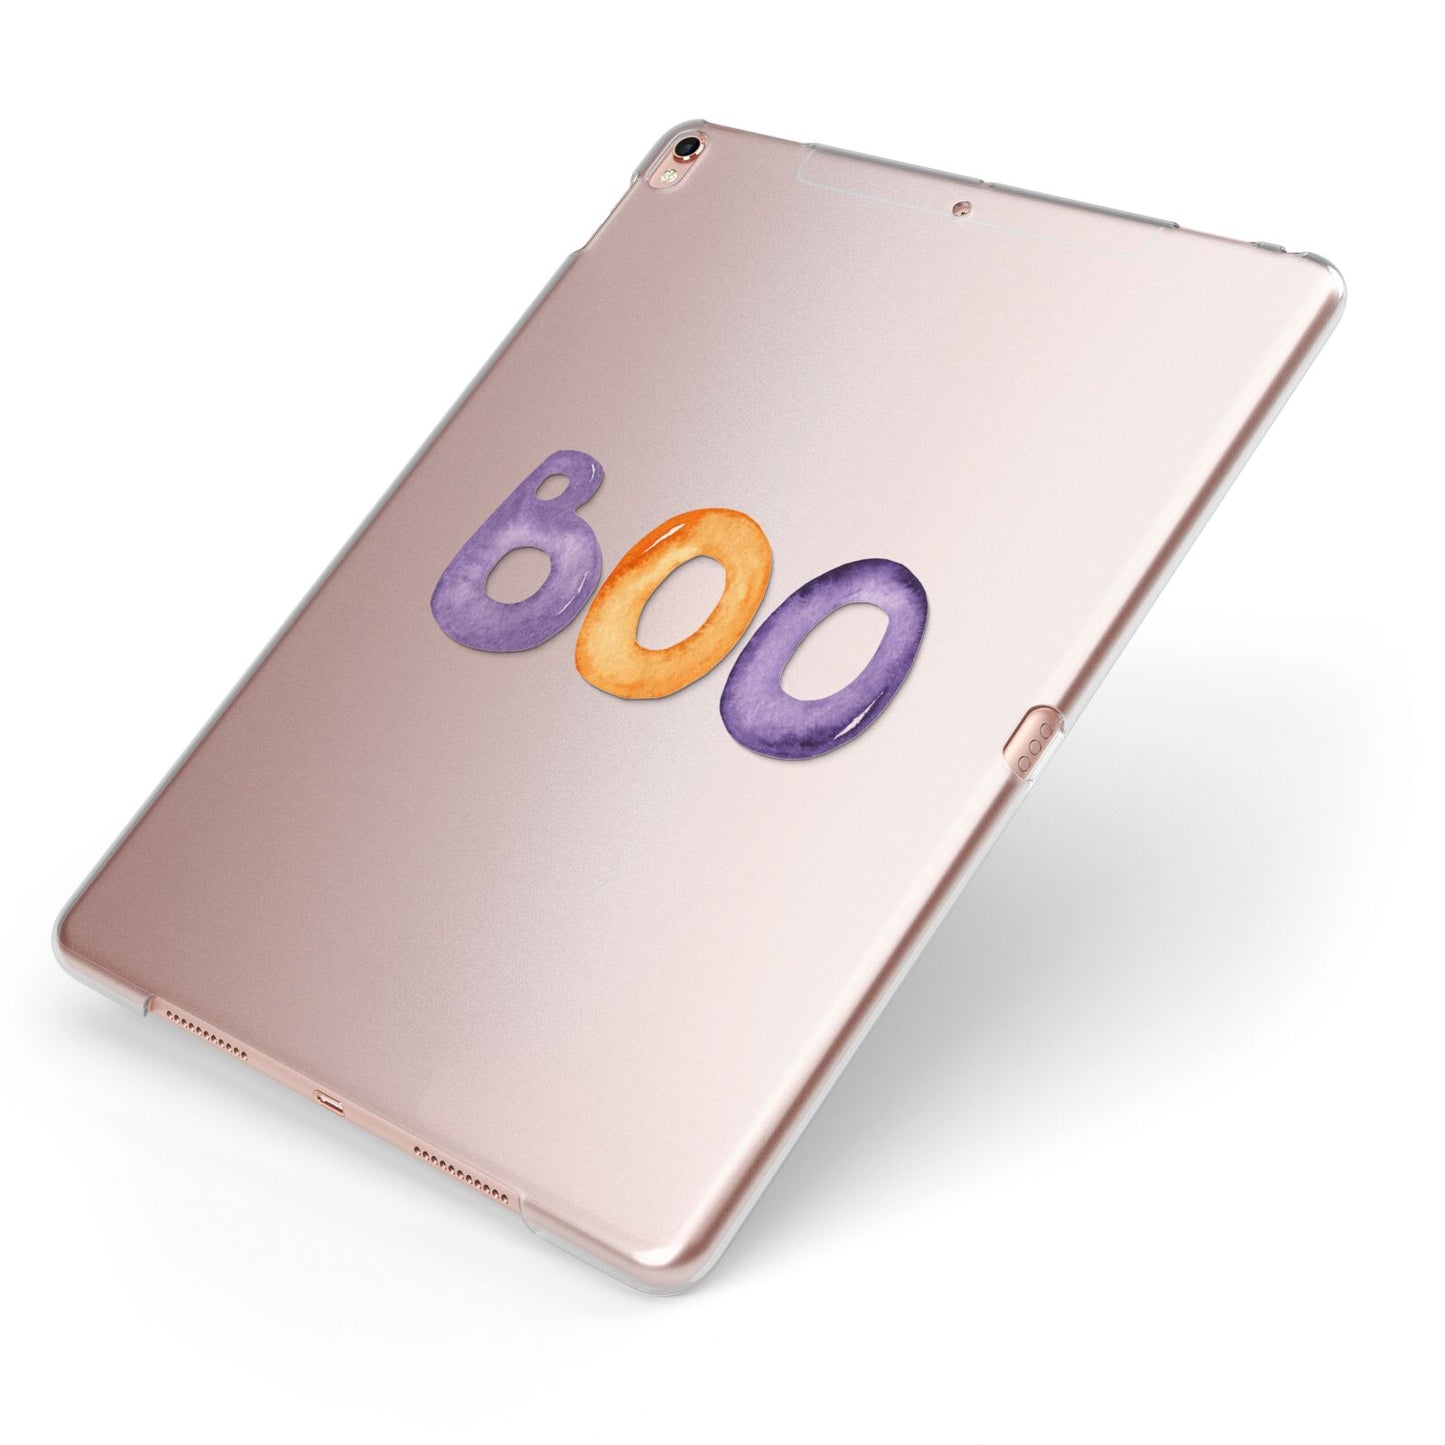 Boo Apple iPad Case on Rose Gold iPad Side View